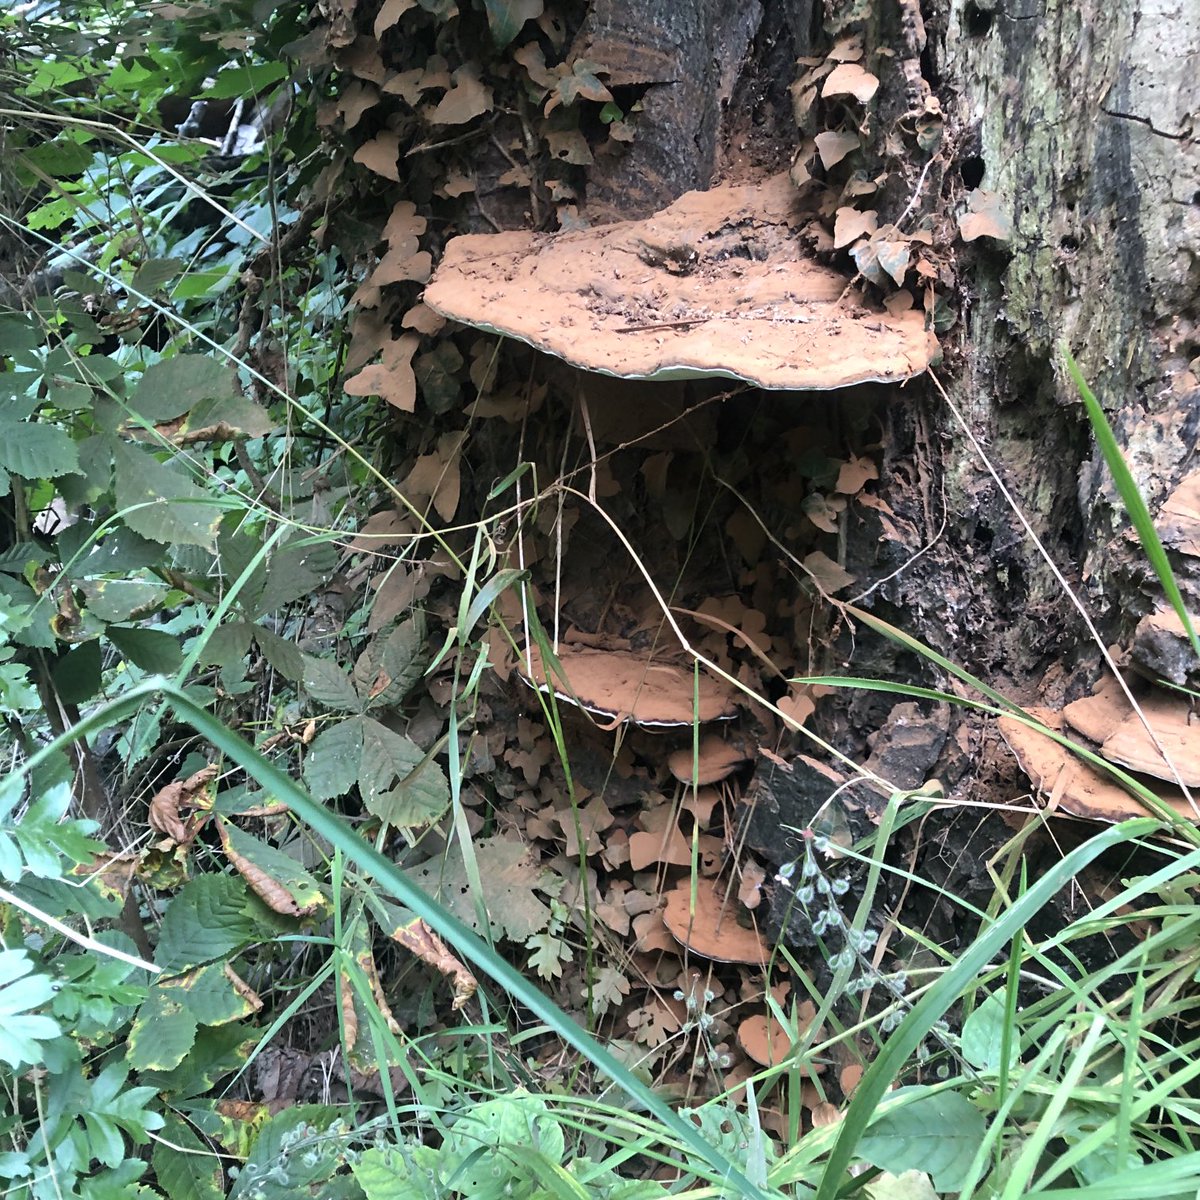 Fomitopsis betulina, or Birch polypore mushroom. Growing from a dead tree stump. Found this family yesterday afternoon 🍄  #Mushroom #NatureIsMagic #Polypore #PolyporeMushroom #Fungus #Fungi #Mycelium #Mycology #NatureIsTheArtist #MatterIsMagic